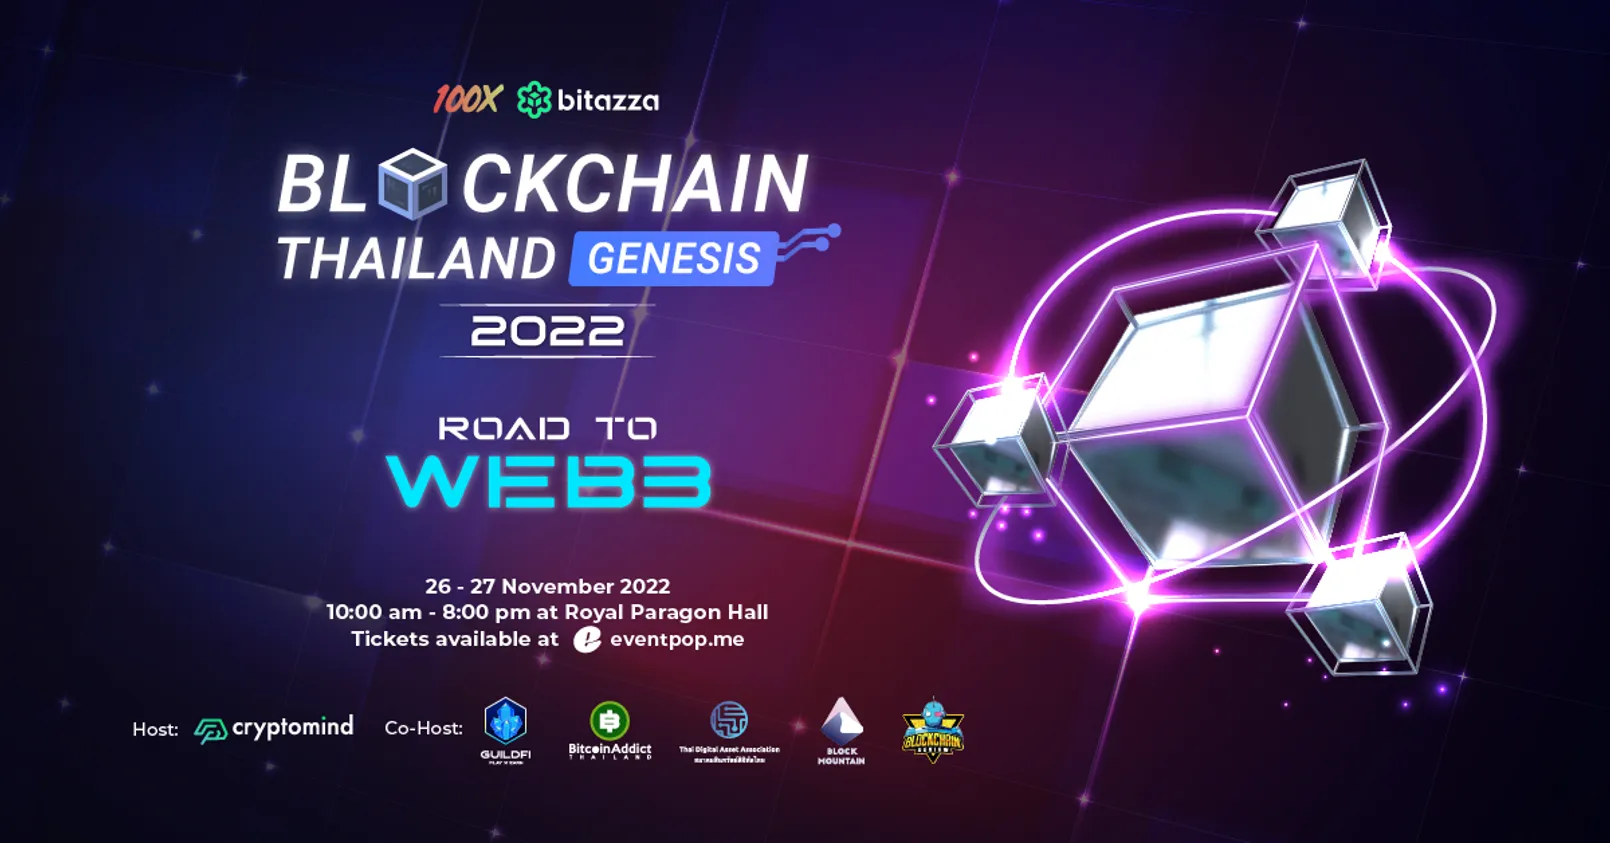 “Blockchain Thailand Genesis 2022: Road to Web3”